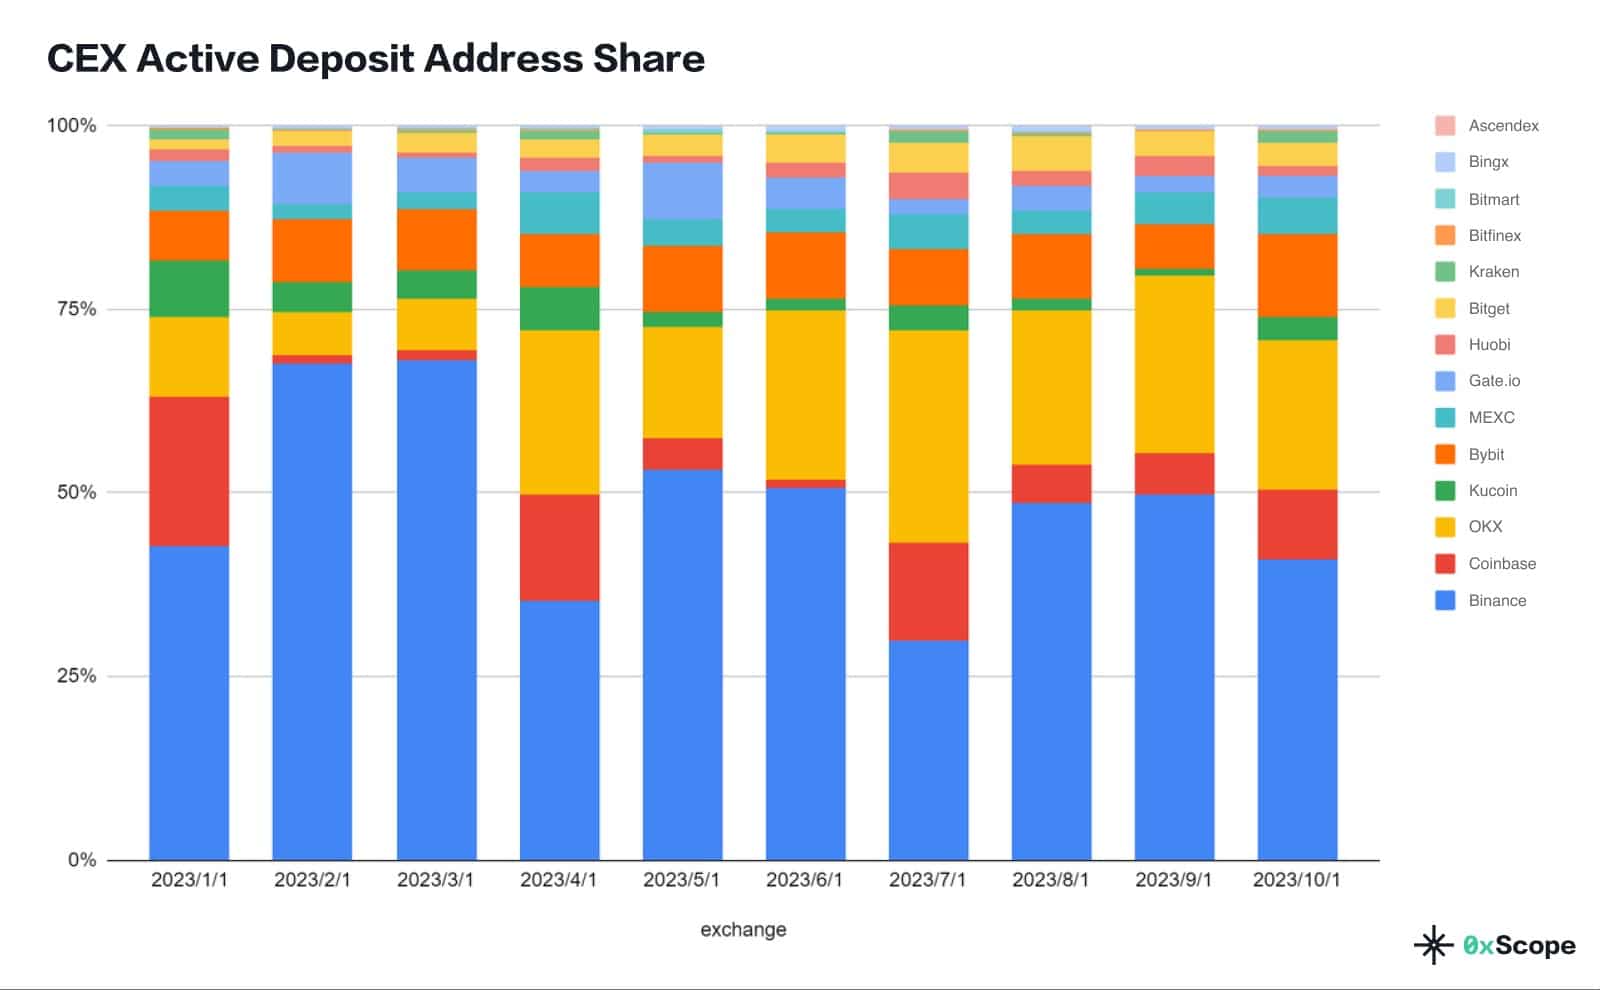 Percentage of active deposit addresses on major crypto CEX